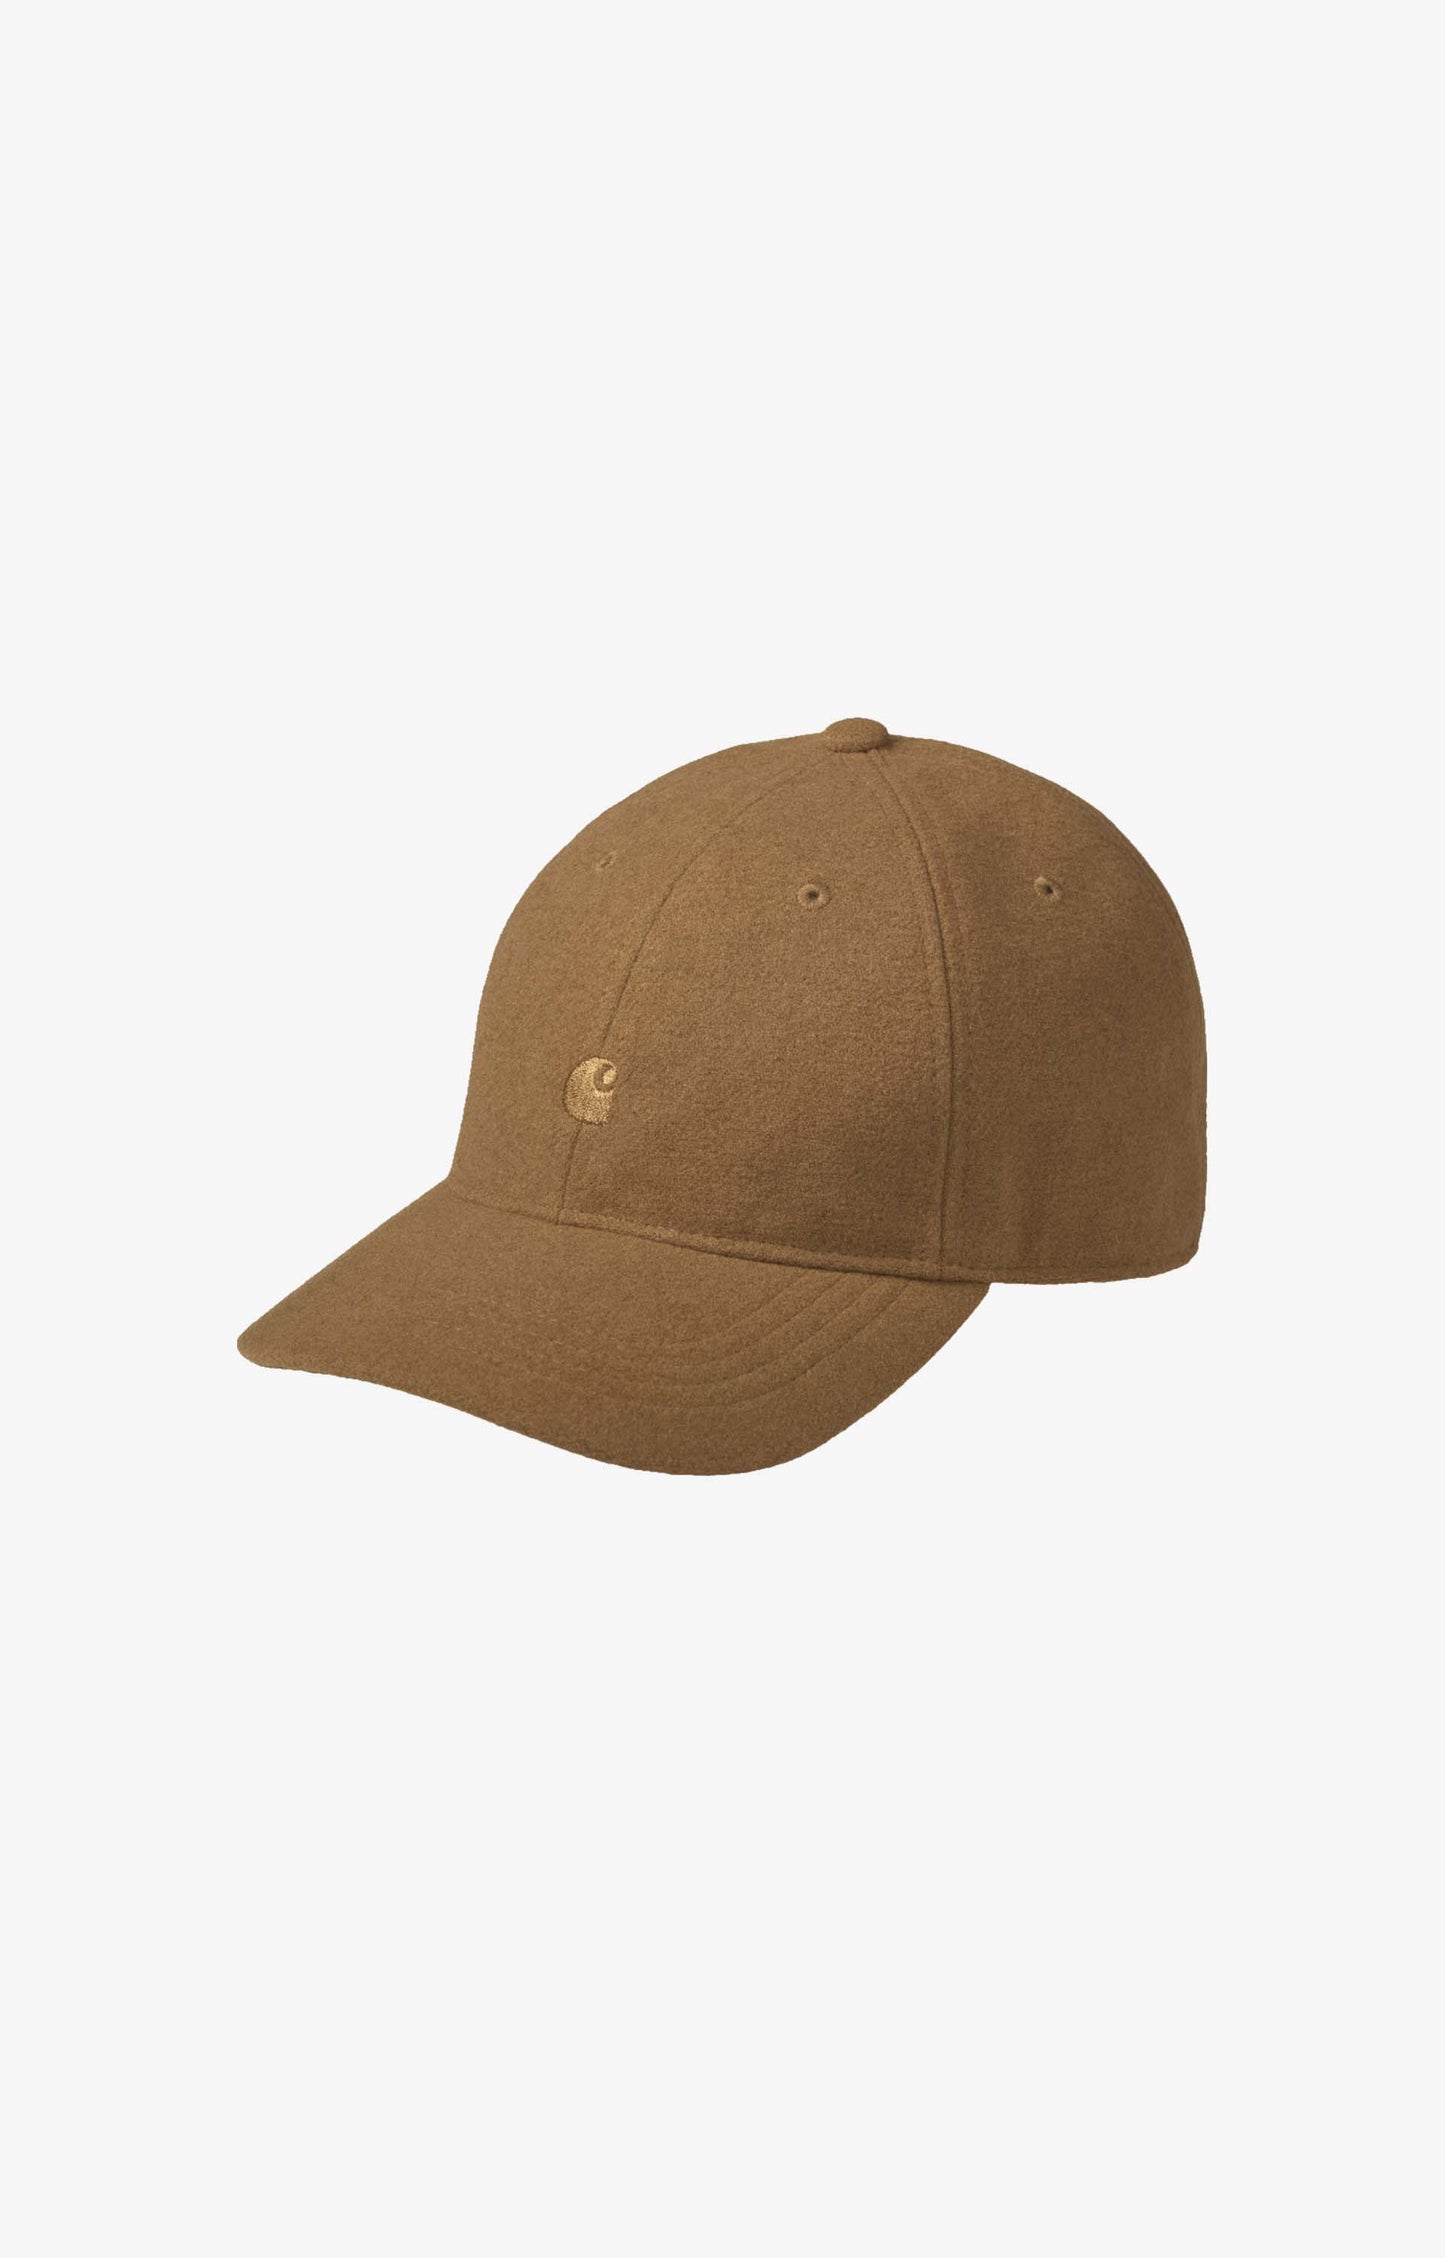 Carhartt WIP Wiston Cap Headwear, Hamilton Brown